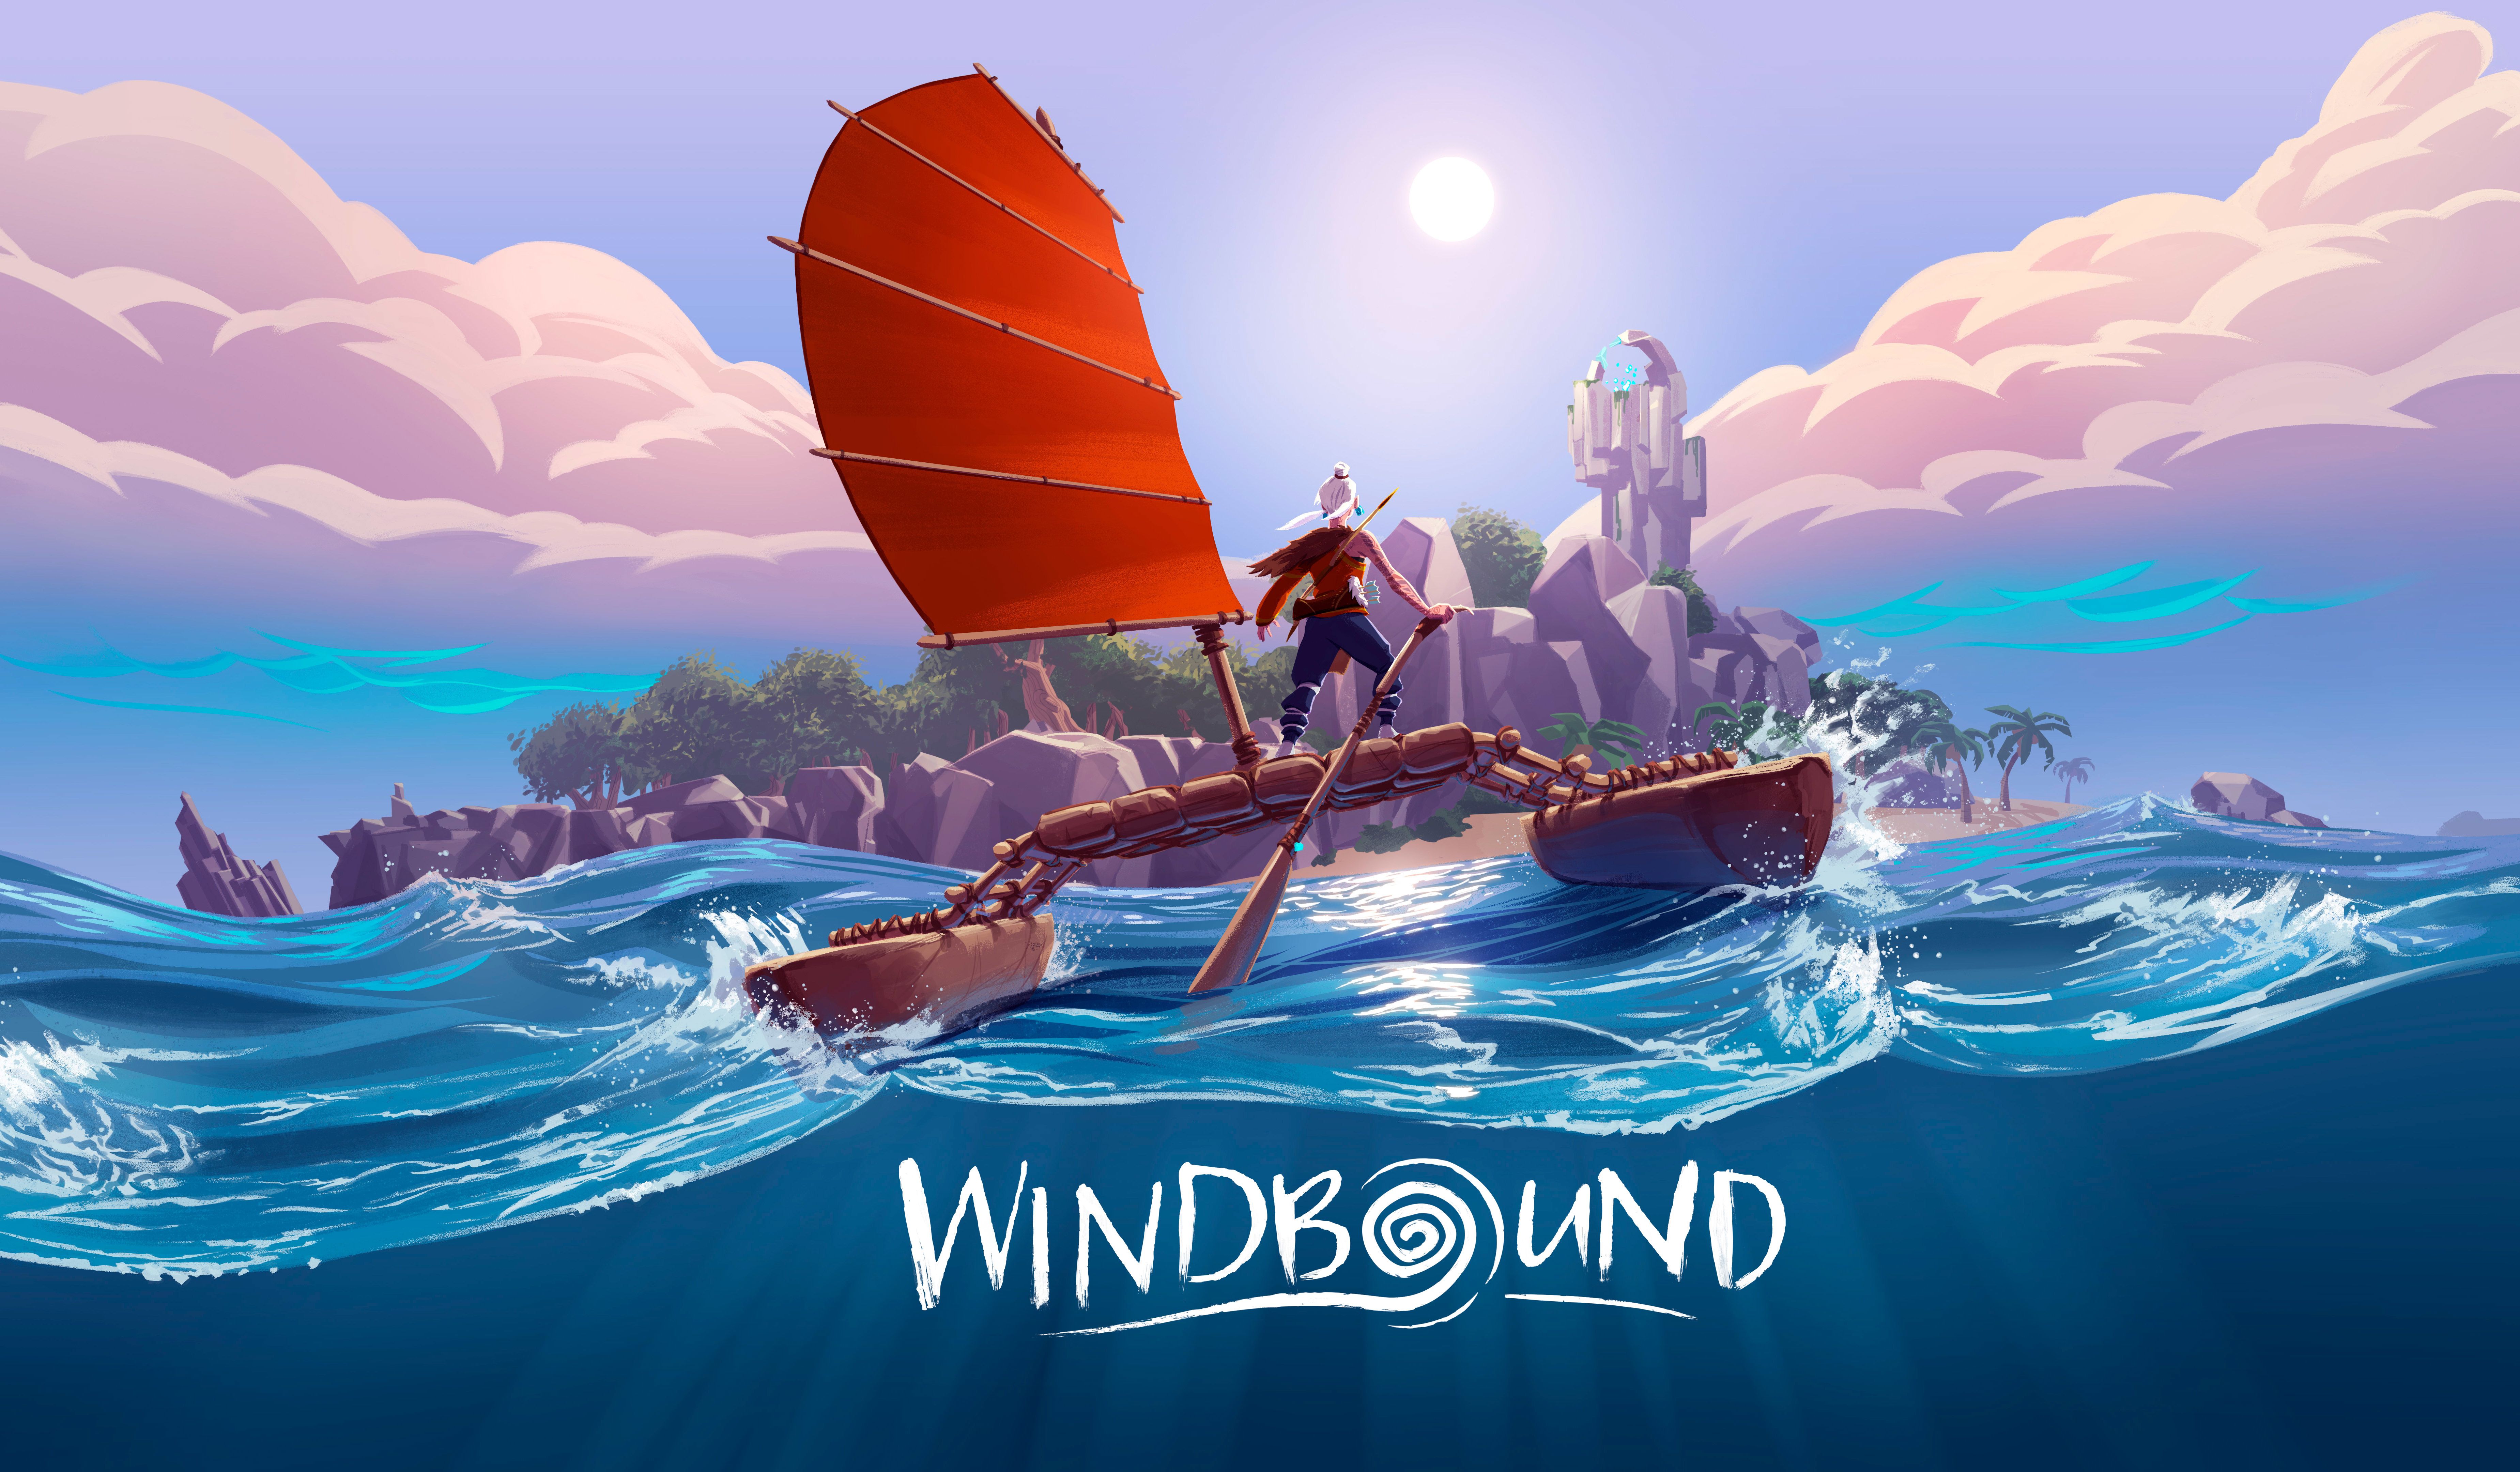 Windbound, HD Games, 4k Wallpaper, Image, Background, Photo